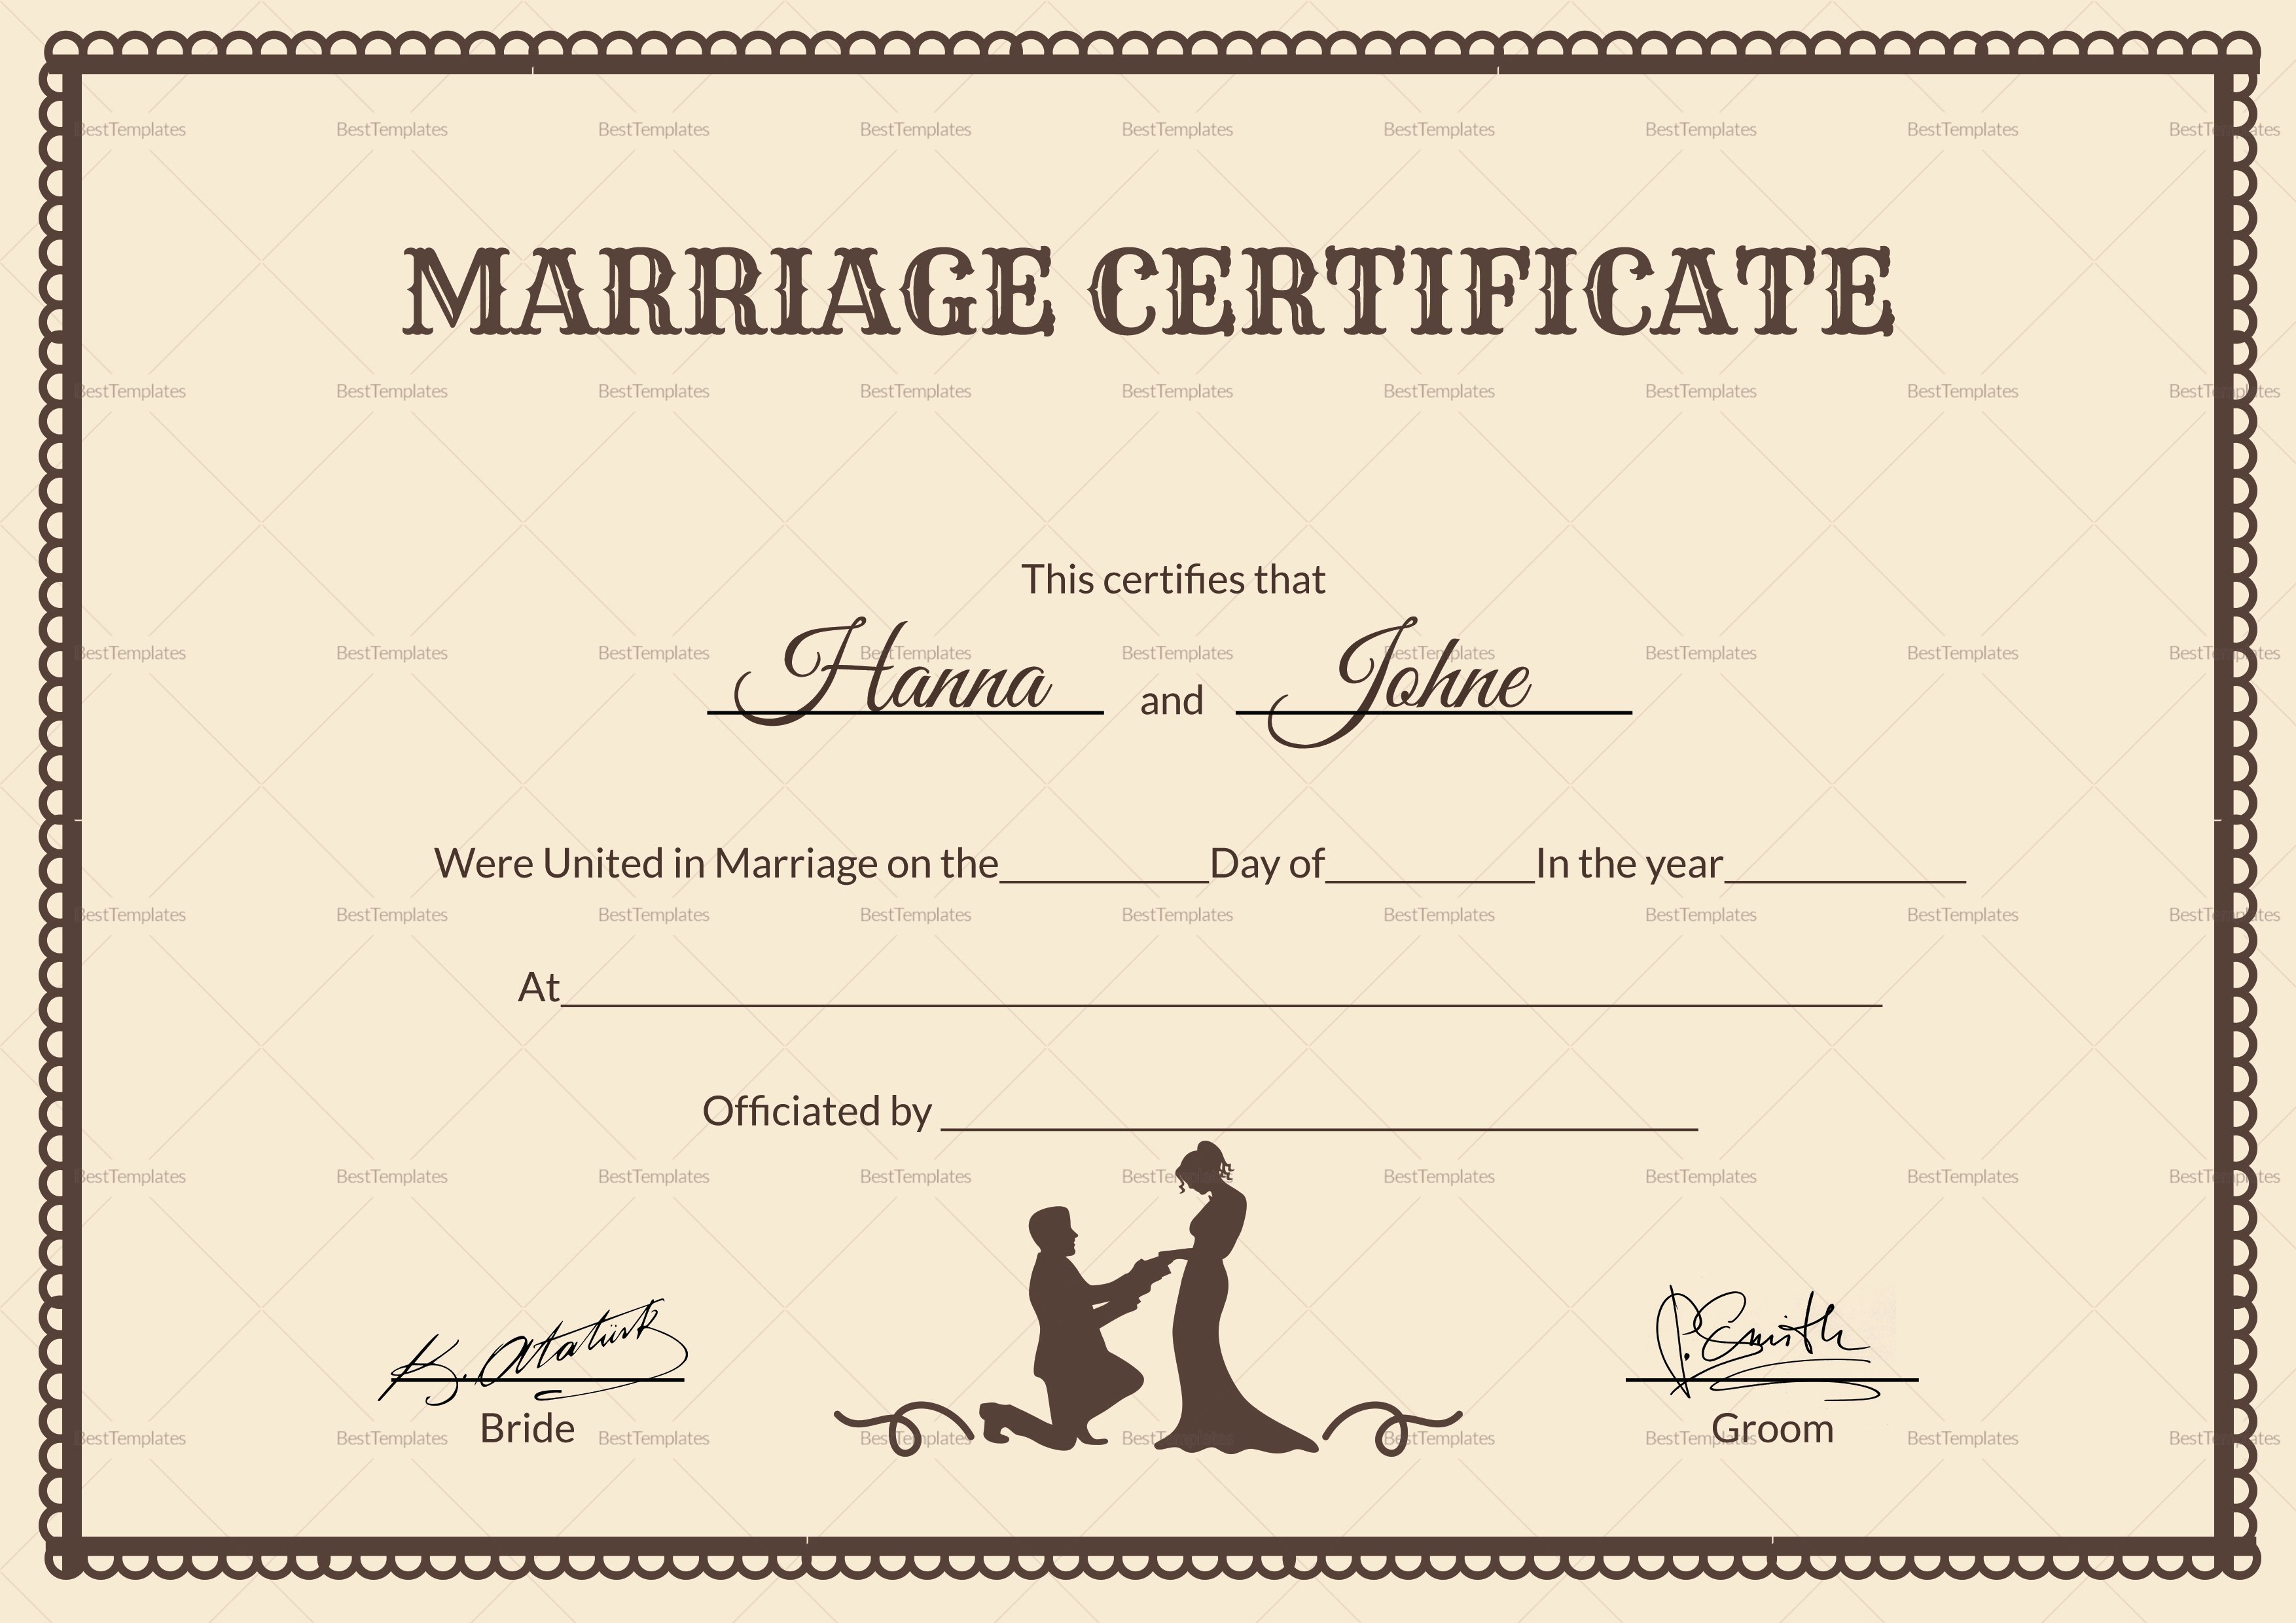 Marriage Certificate Template Word Luxury Vintage Marriage Certificate Design Template In Psd Word